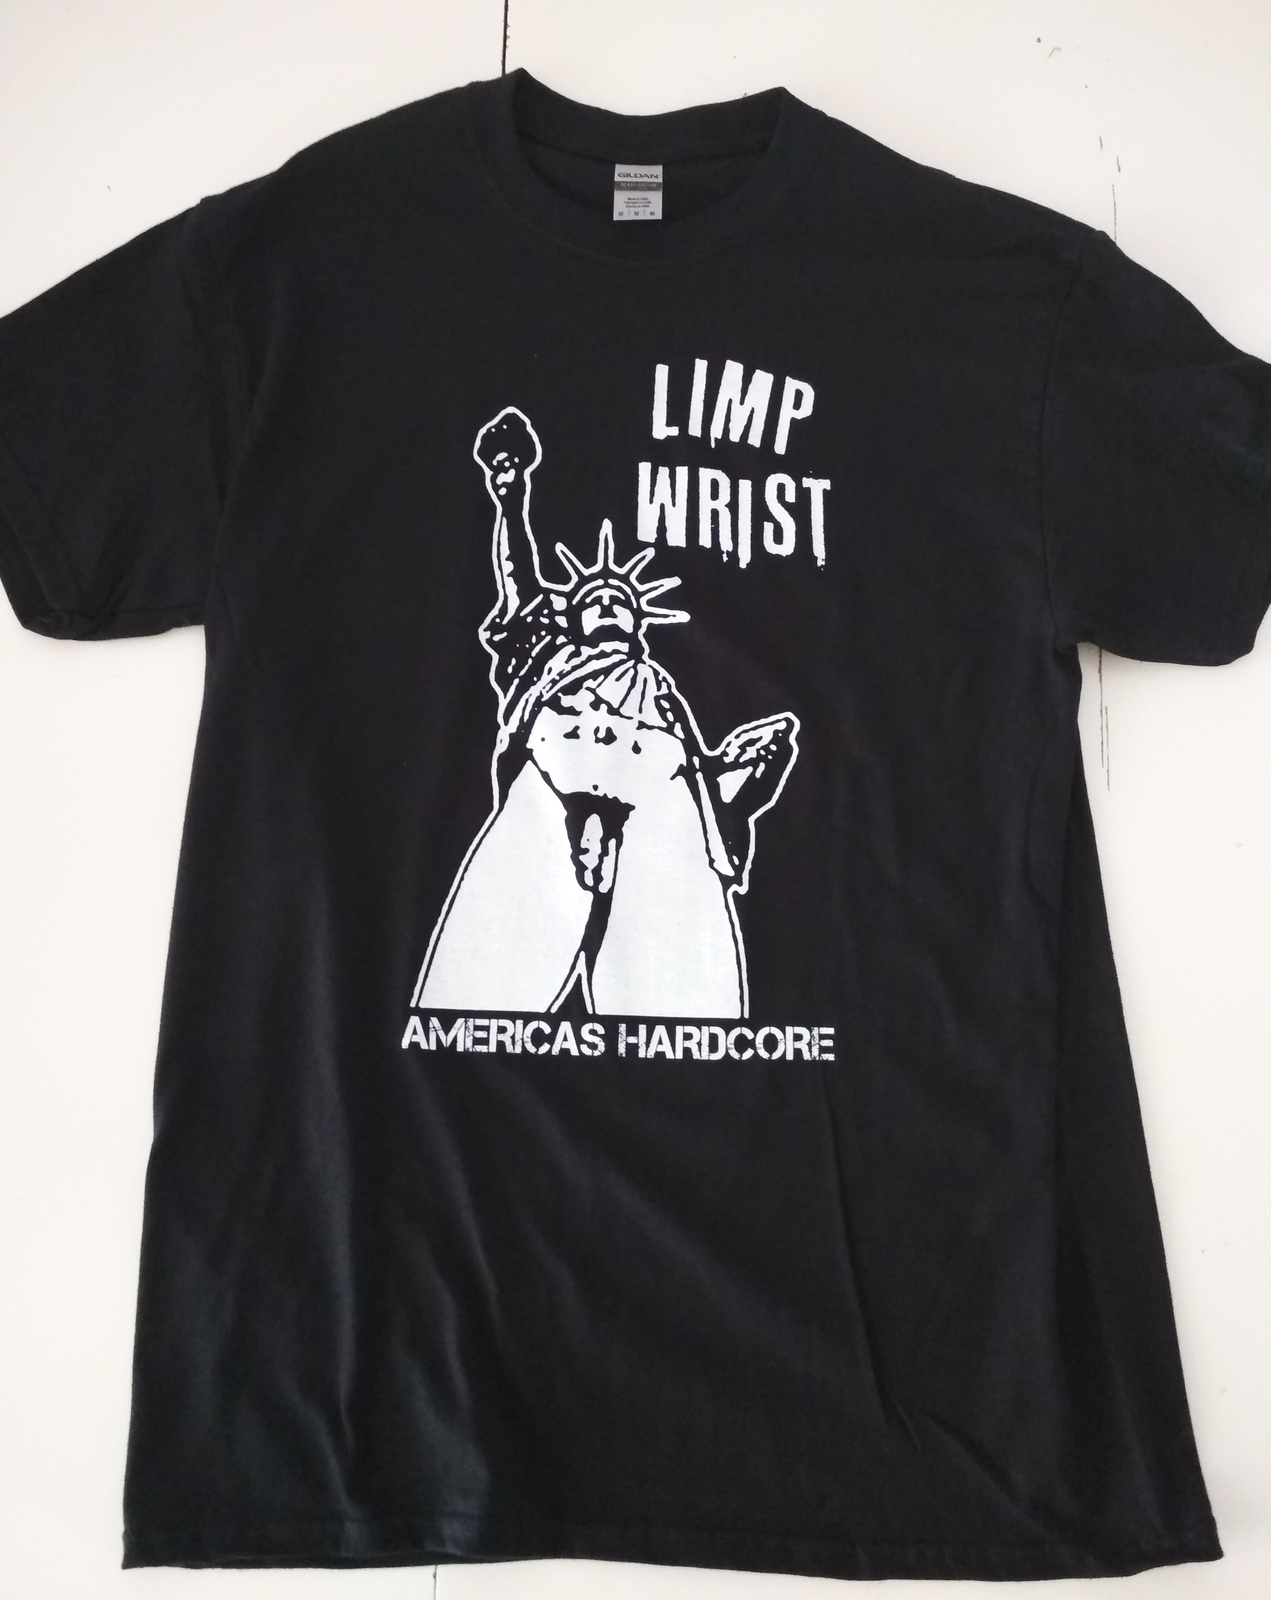 Limp Wrist - punk shirt - Americas Hardcore - punk t-shirt - hardcore punk